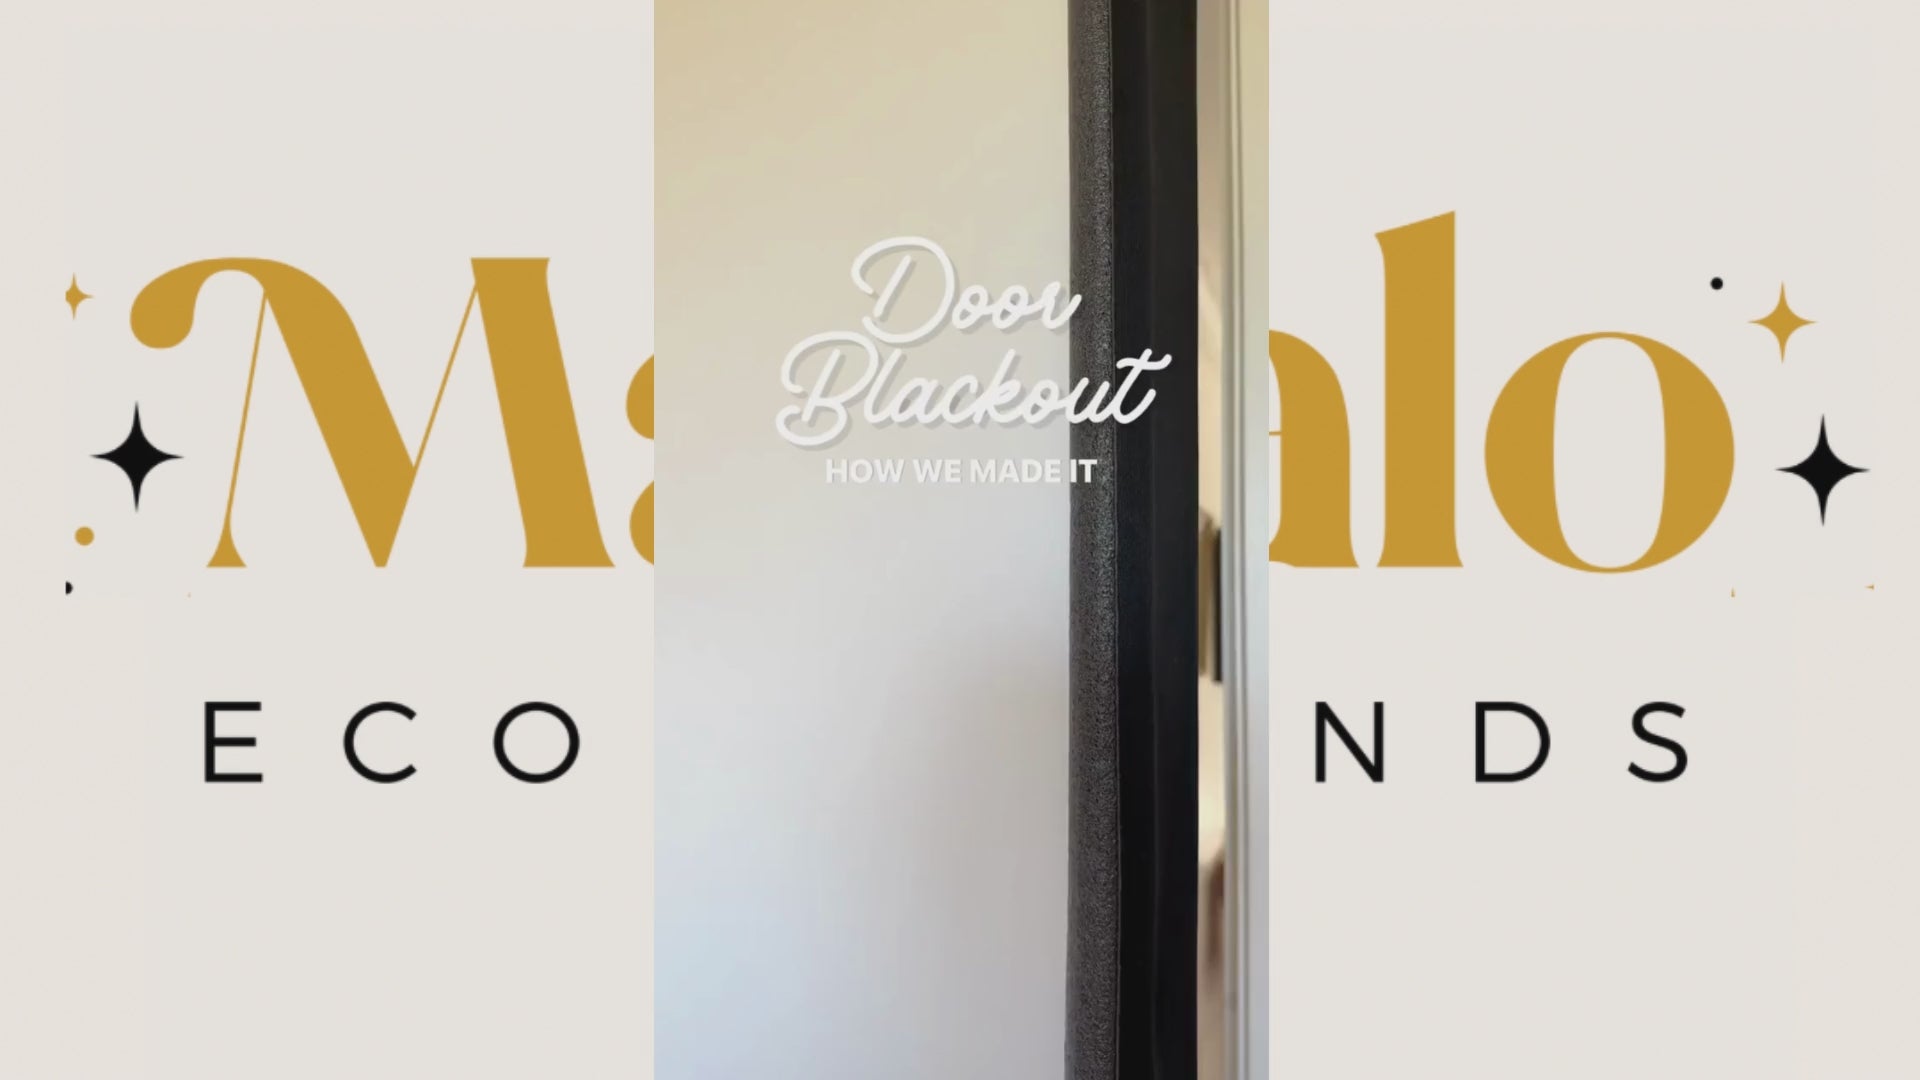 Load video: Mahalo Door Blackouts how to install